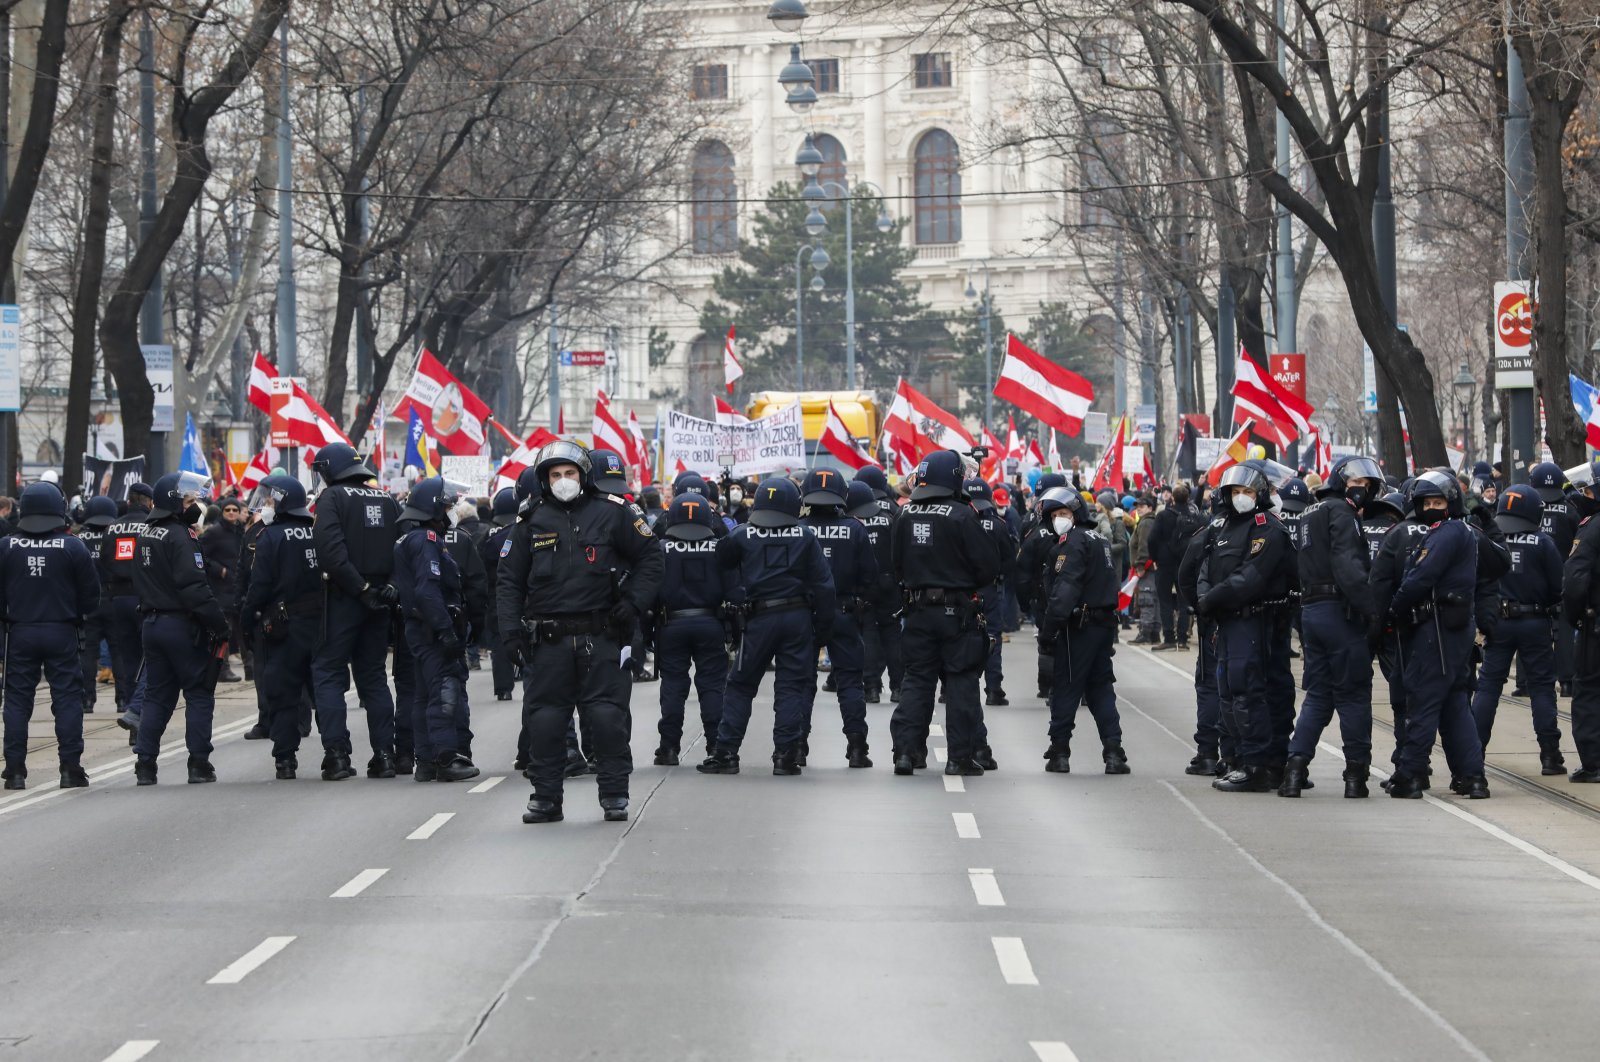 Protes terhadap tindakan COVID-19 membara di Jerman, Austria